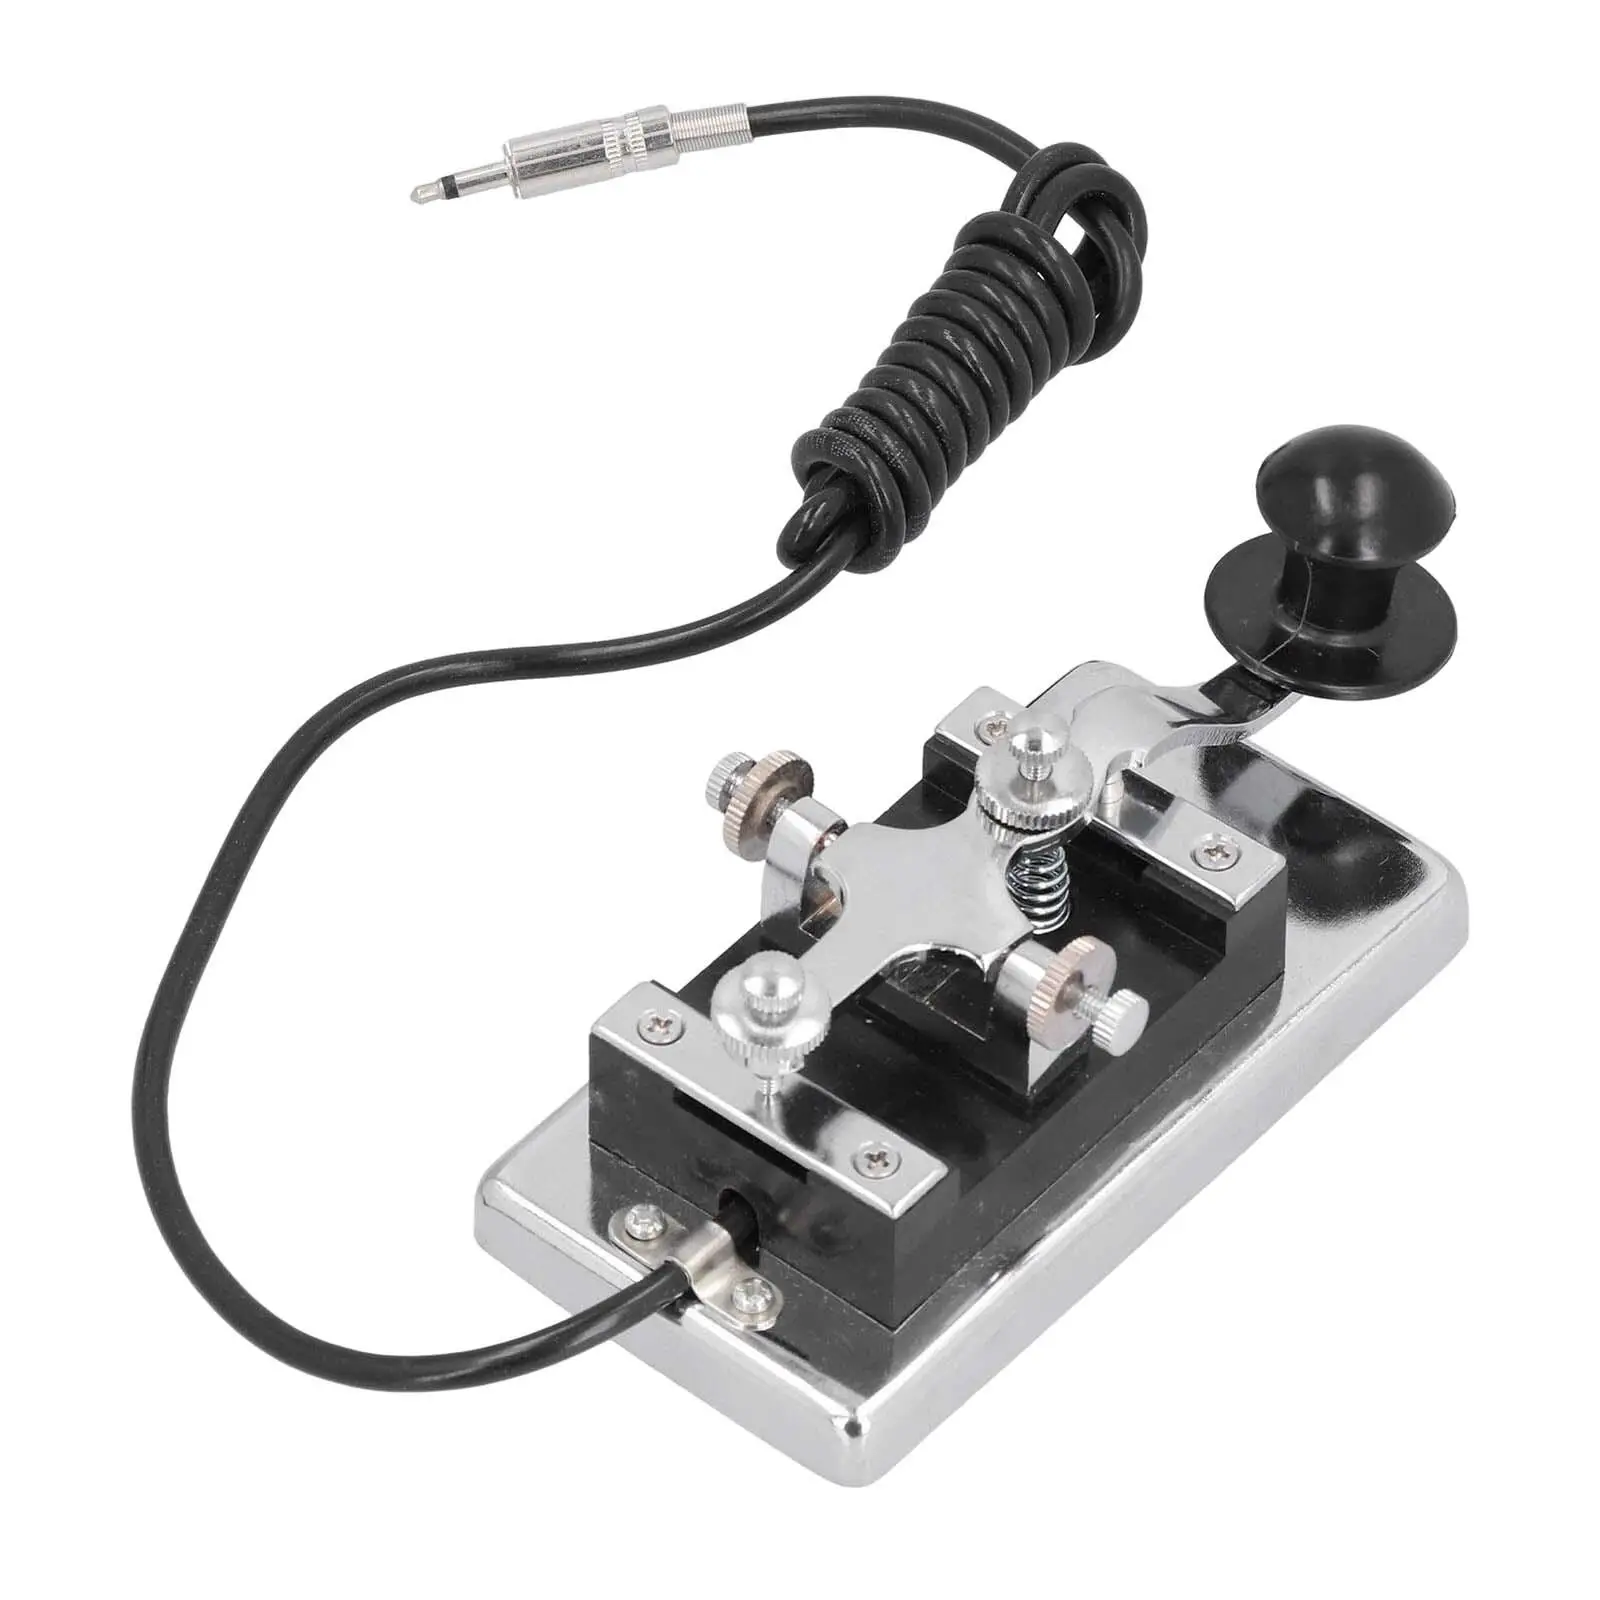 Telegraph Key Portable CW Morse Practice Key Straight Key for Radio Amateur Exerciser